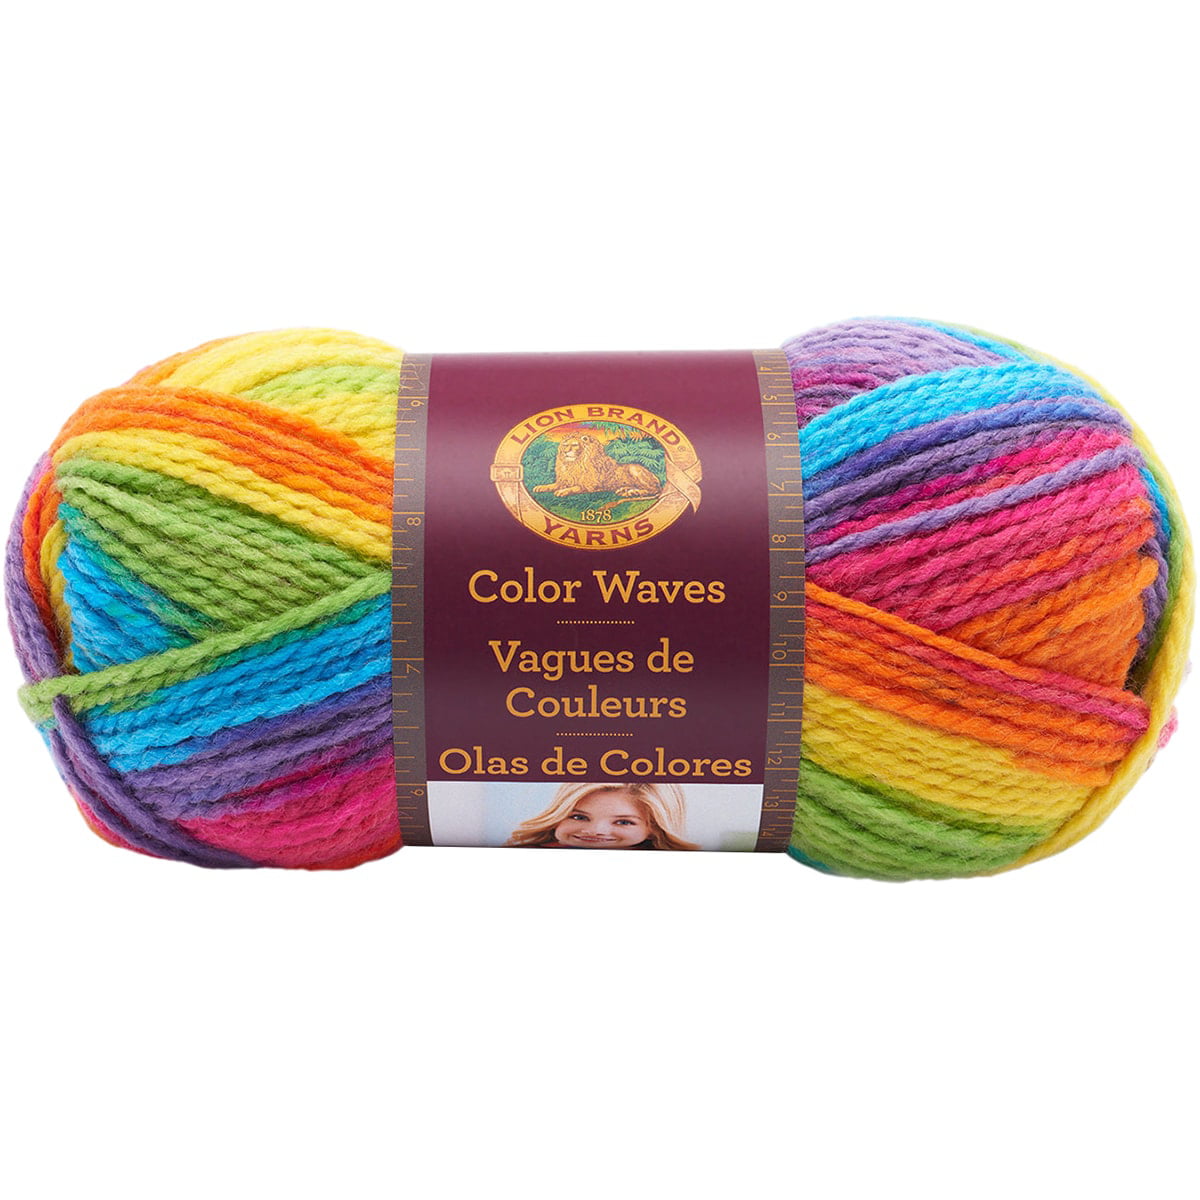 Lion Brand Color Waves Yarn Rainbow